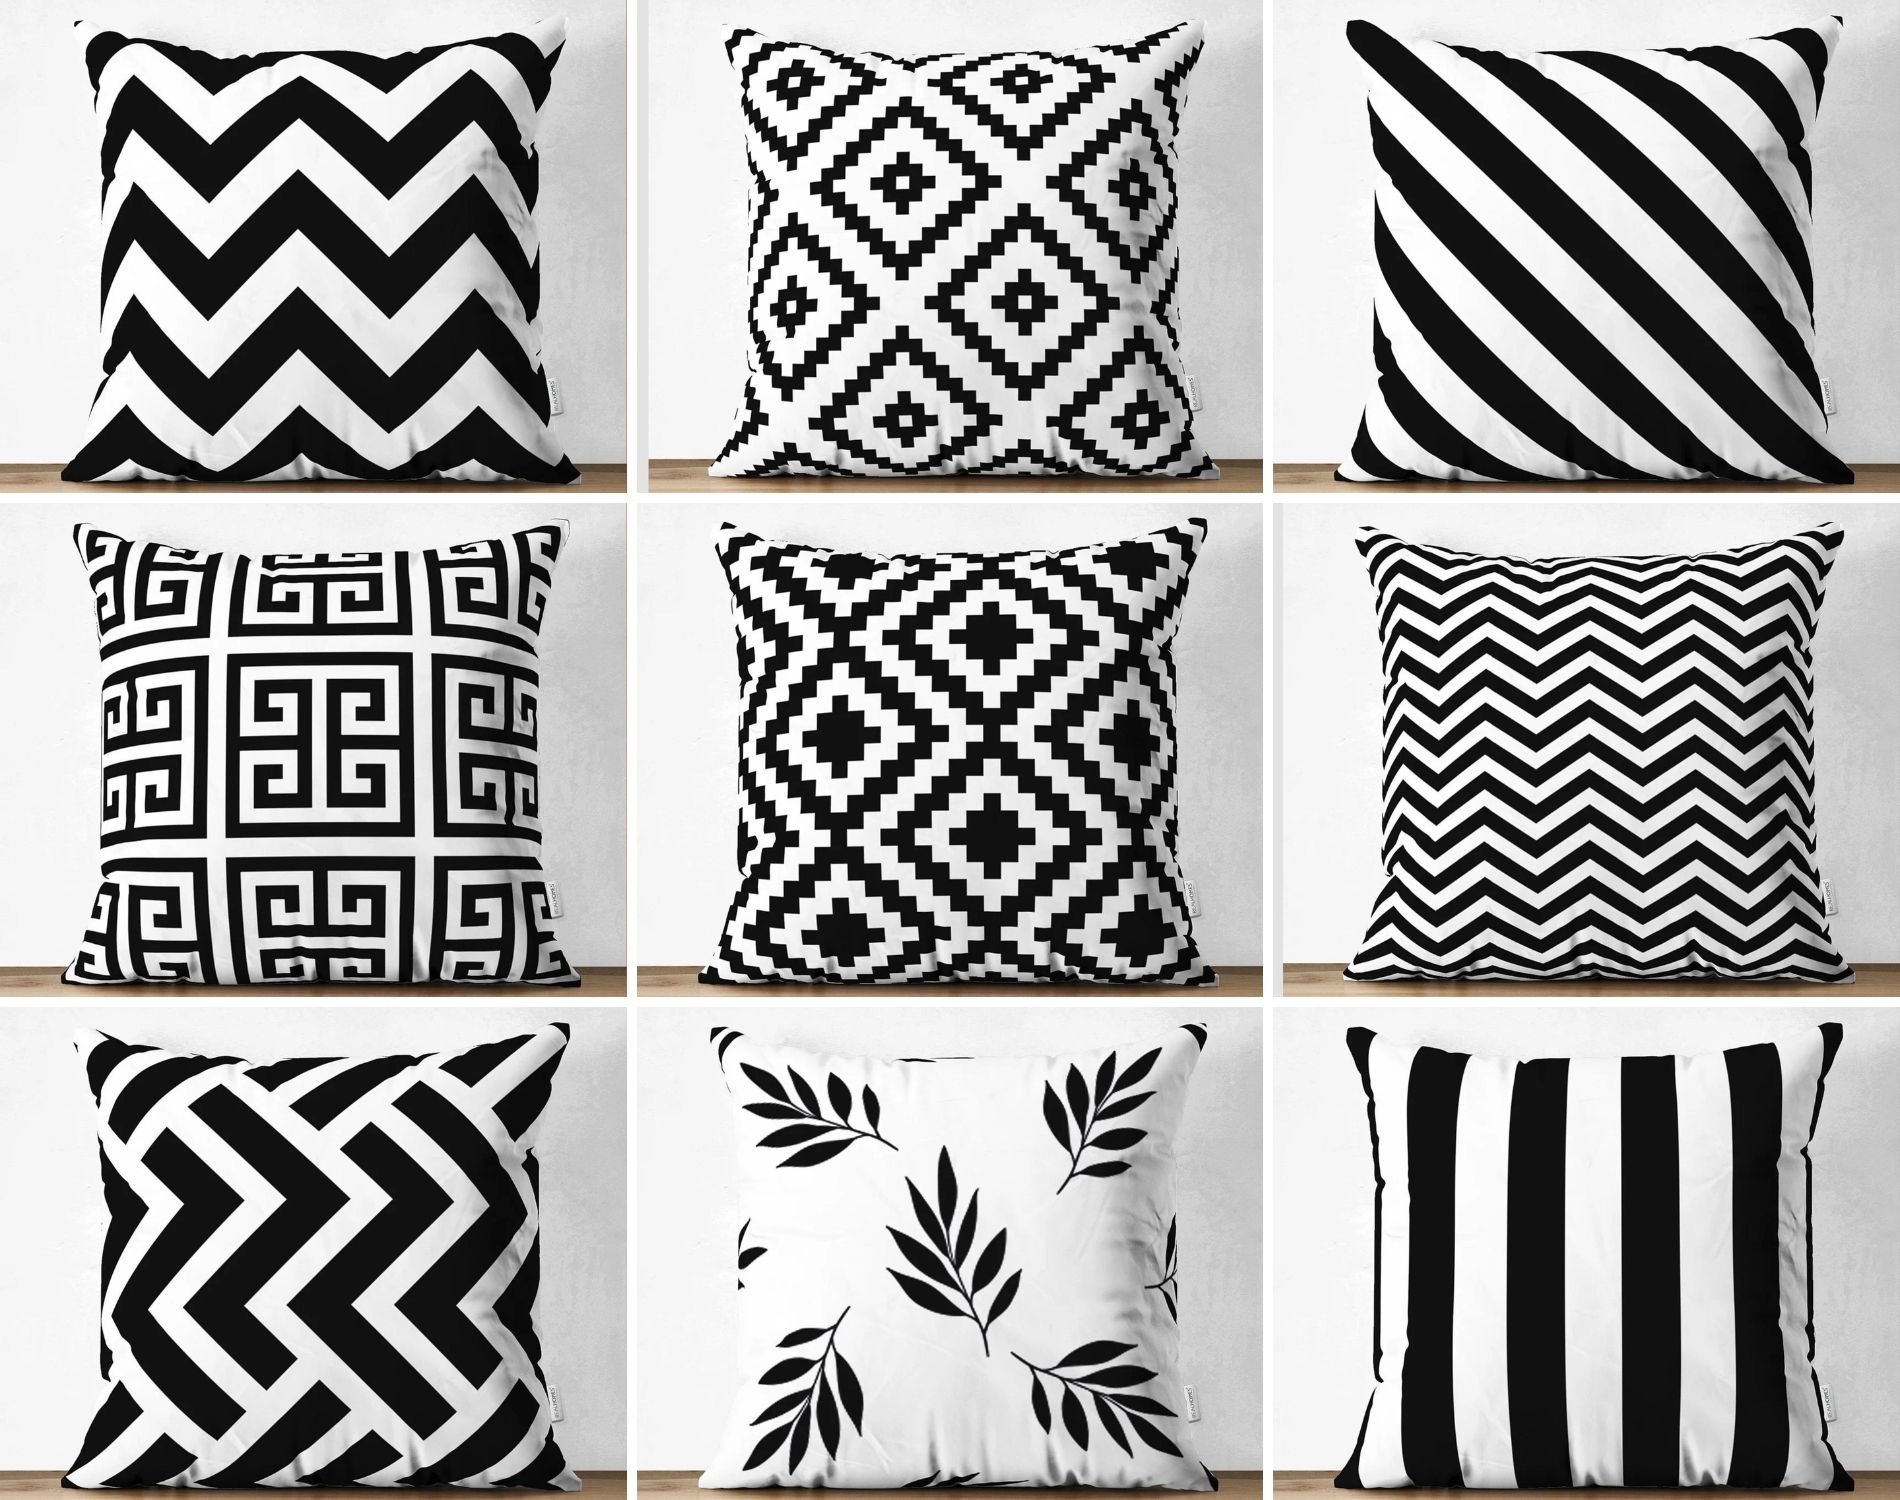 Buy Indoor Duralee Royal - 18x18 Vertical Stripes Throw Pillow